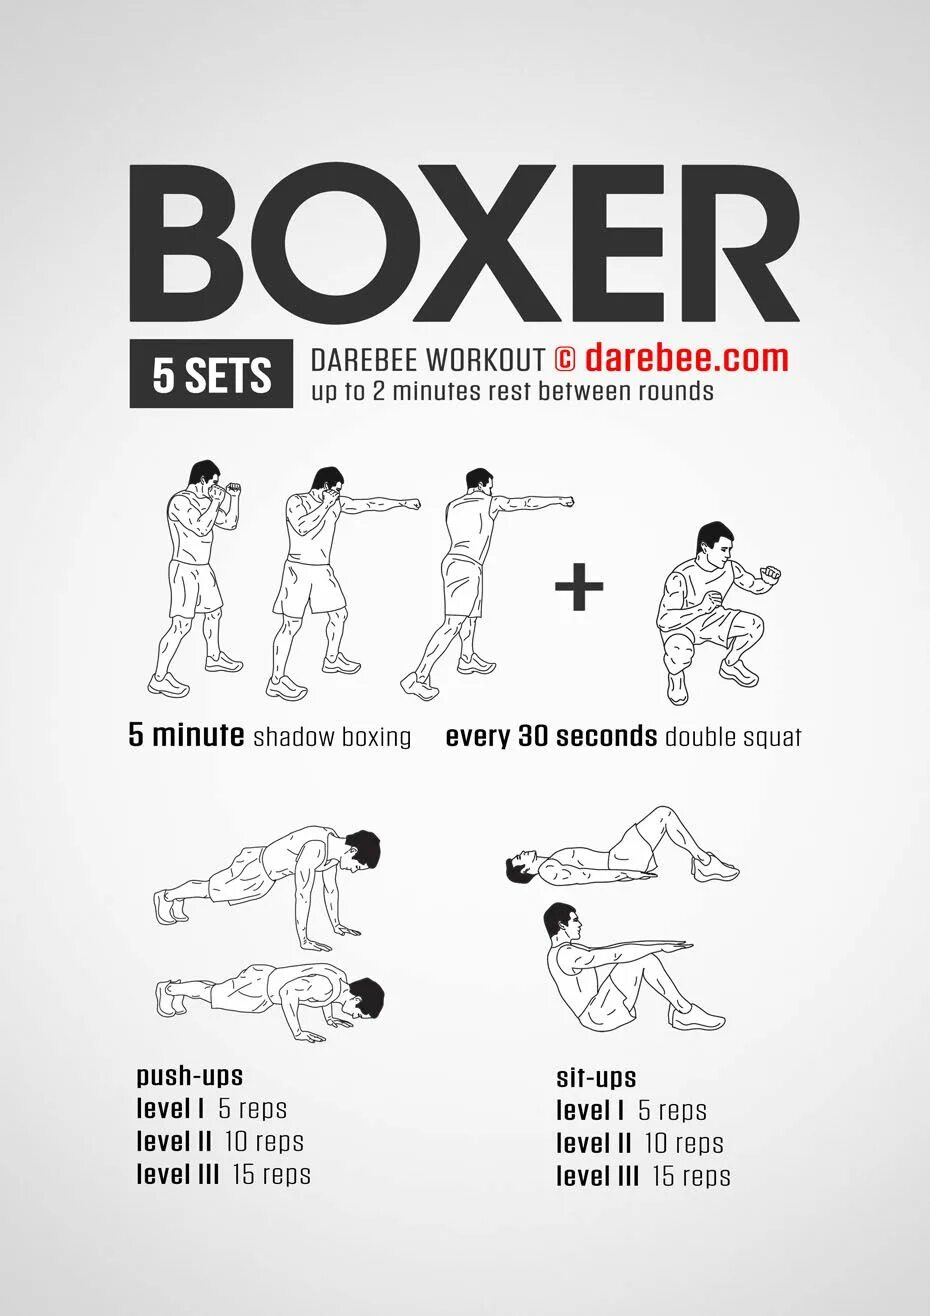 DAREBEE Boxer Workout. План тренировок бокс. План тренировки боксера. Упражнения для бокса. T me ups boxing